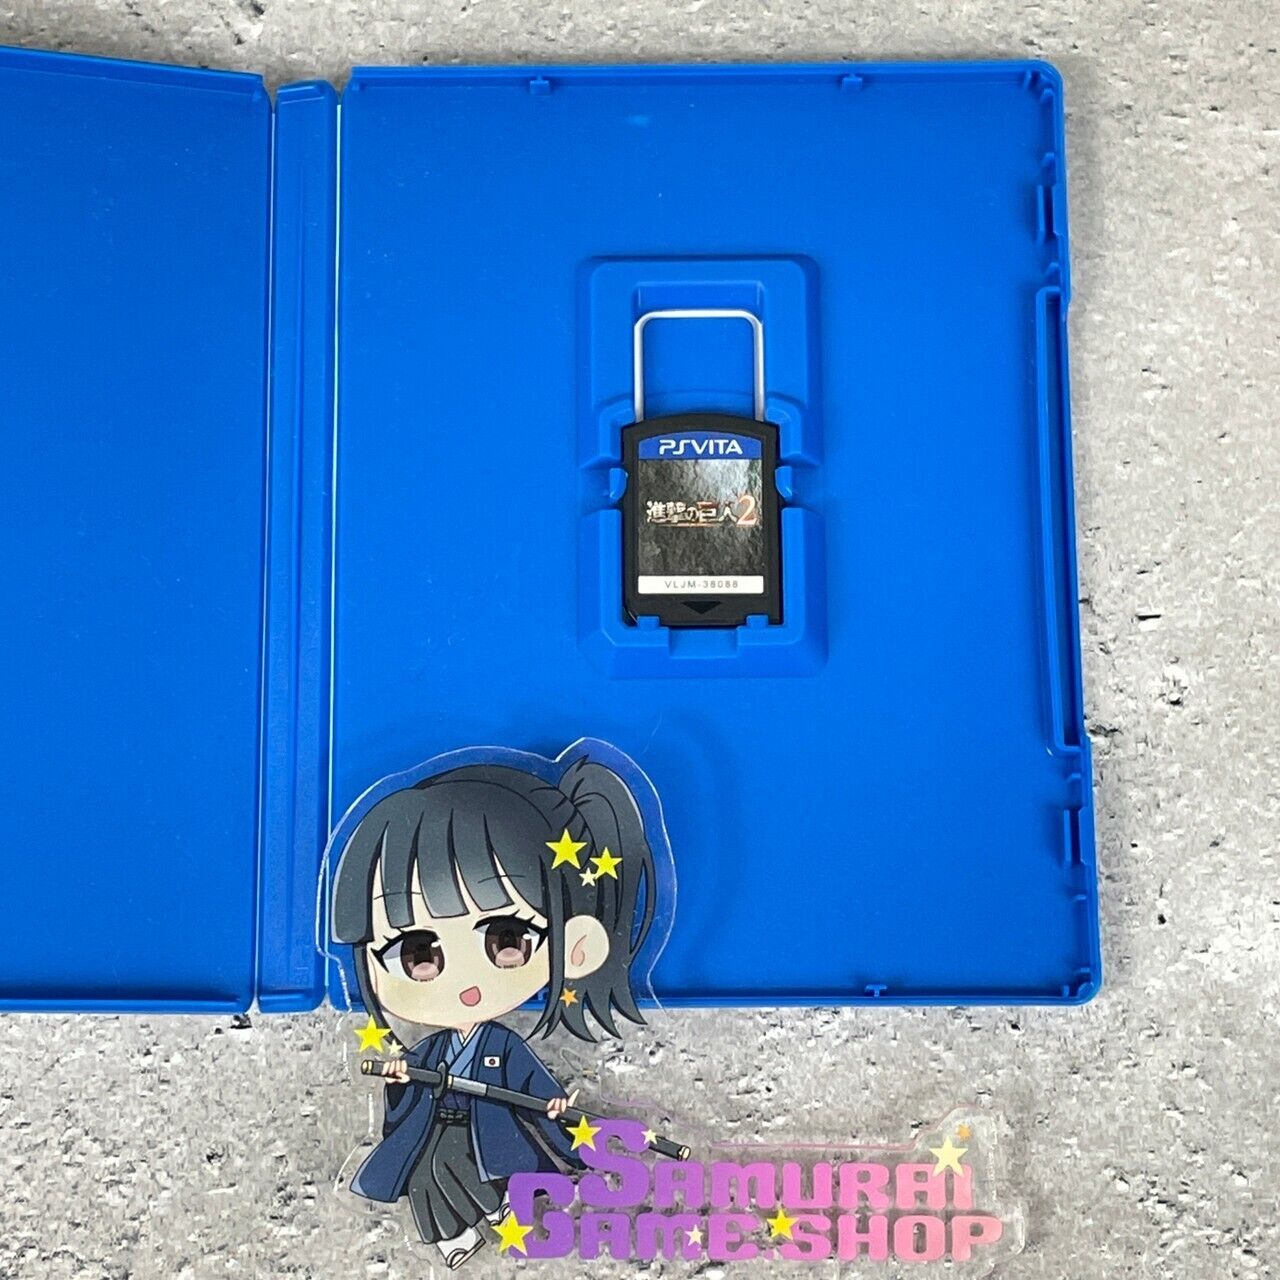 PS Vita Attack on Titan 2 KOEI TECMO GAMES Japanese Ver. Cartridge Case Manual